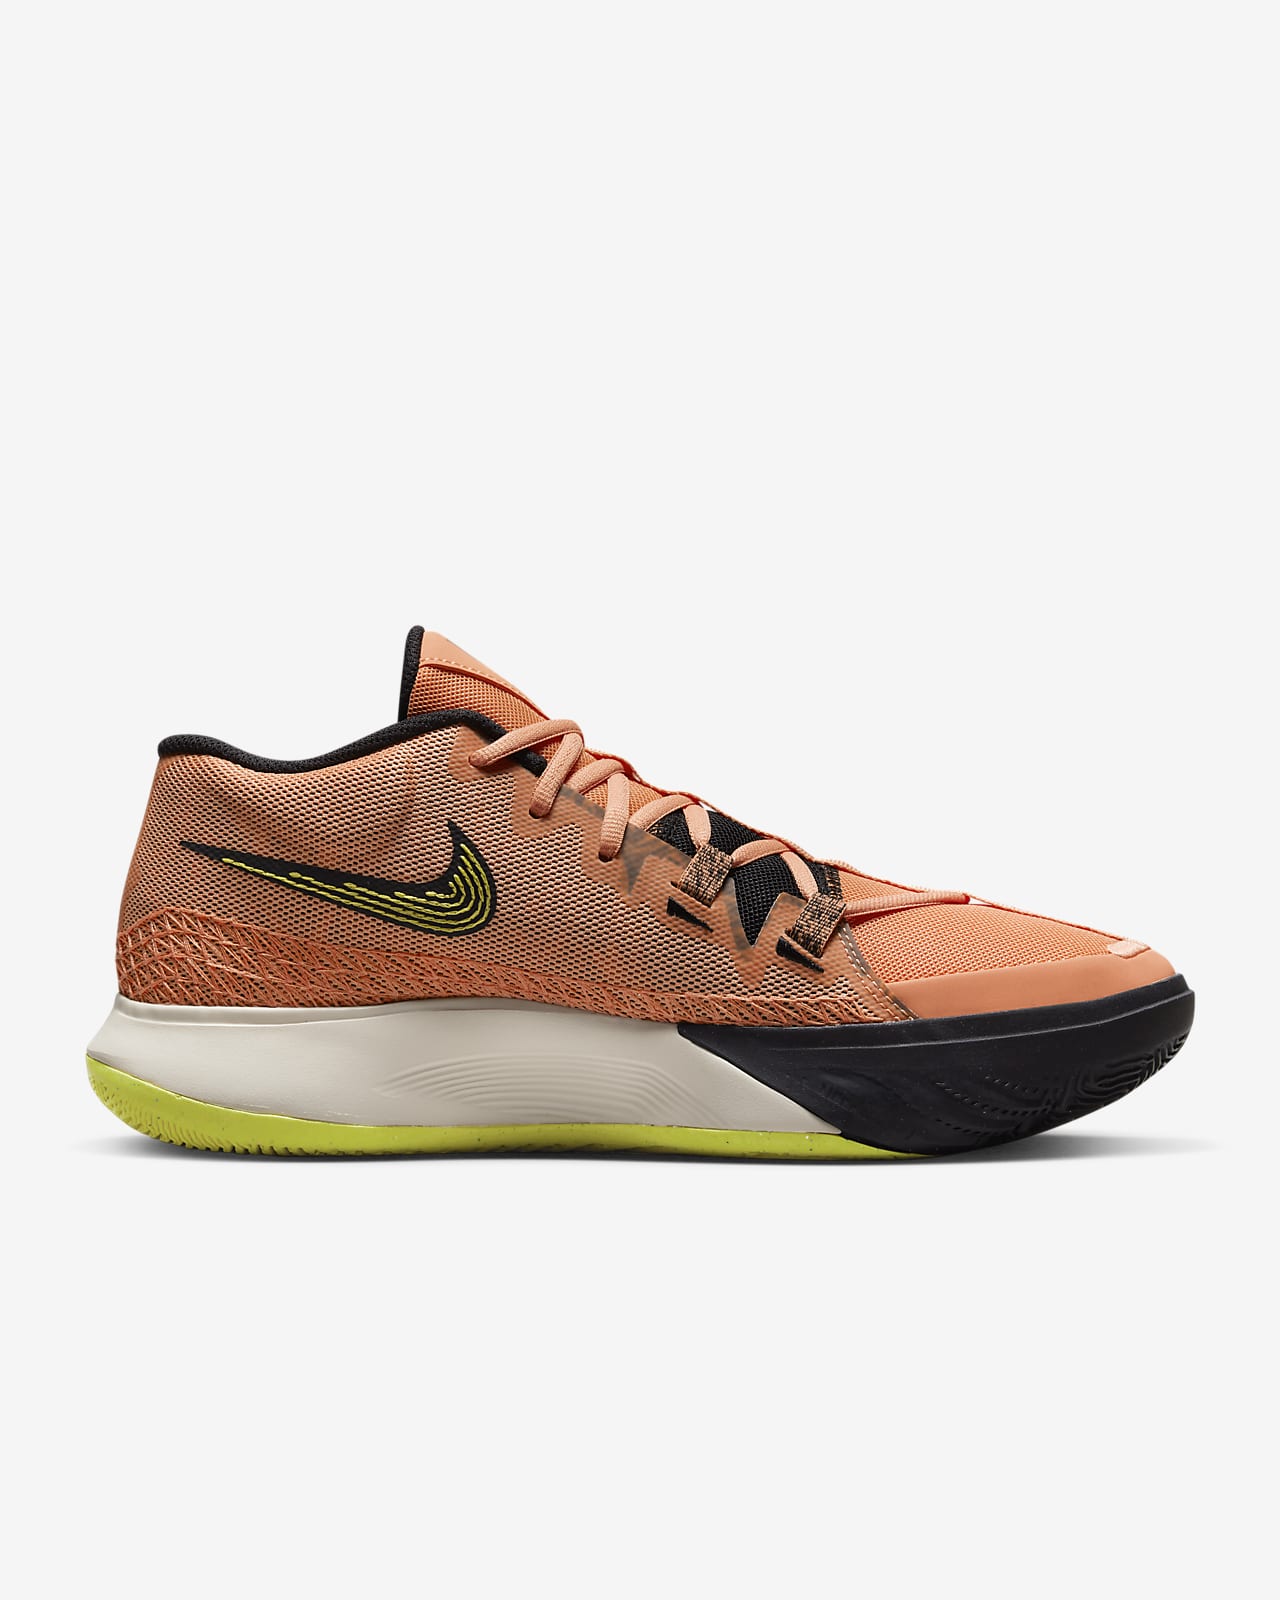 Kyrie Flytrap 6 Basketball Shoes. Nike AE